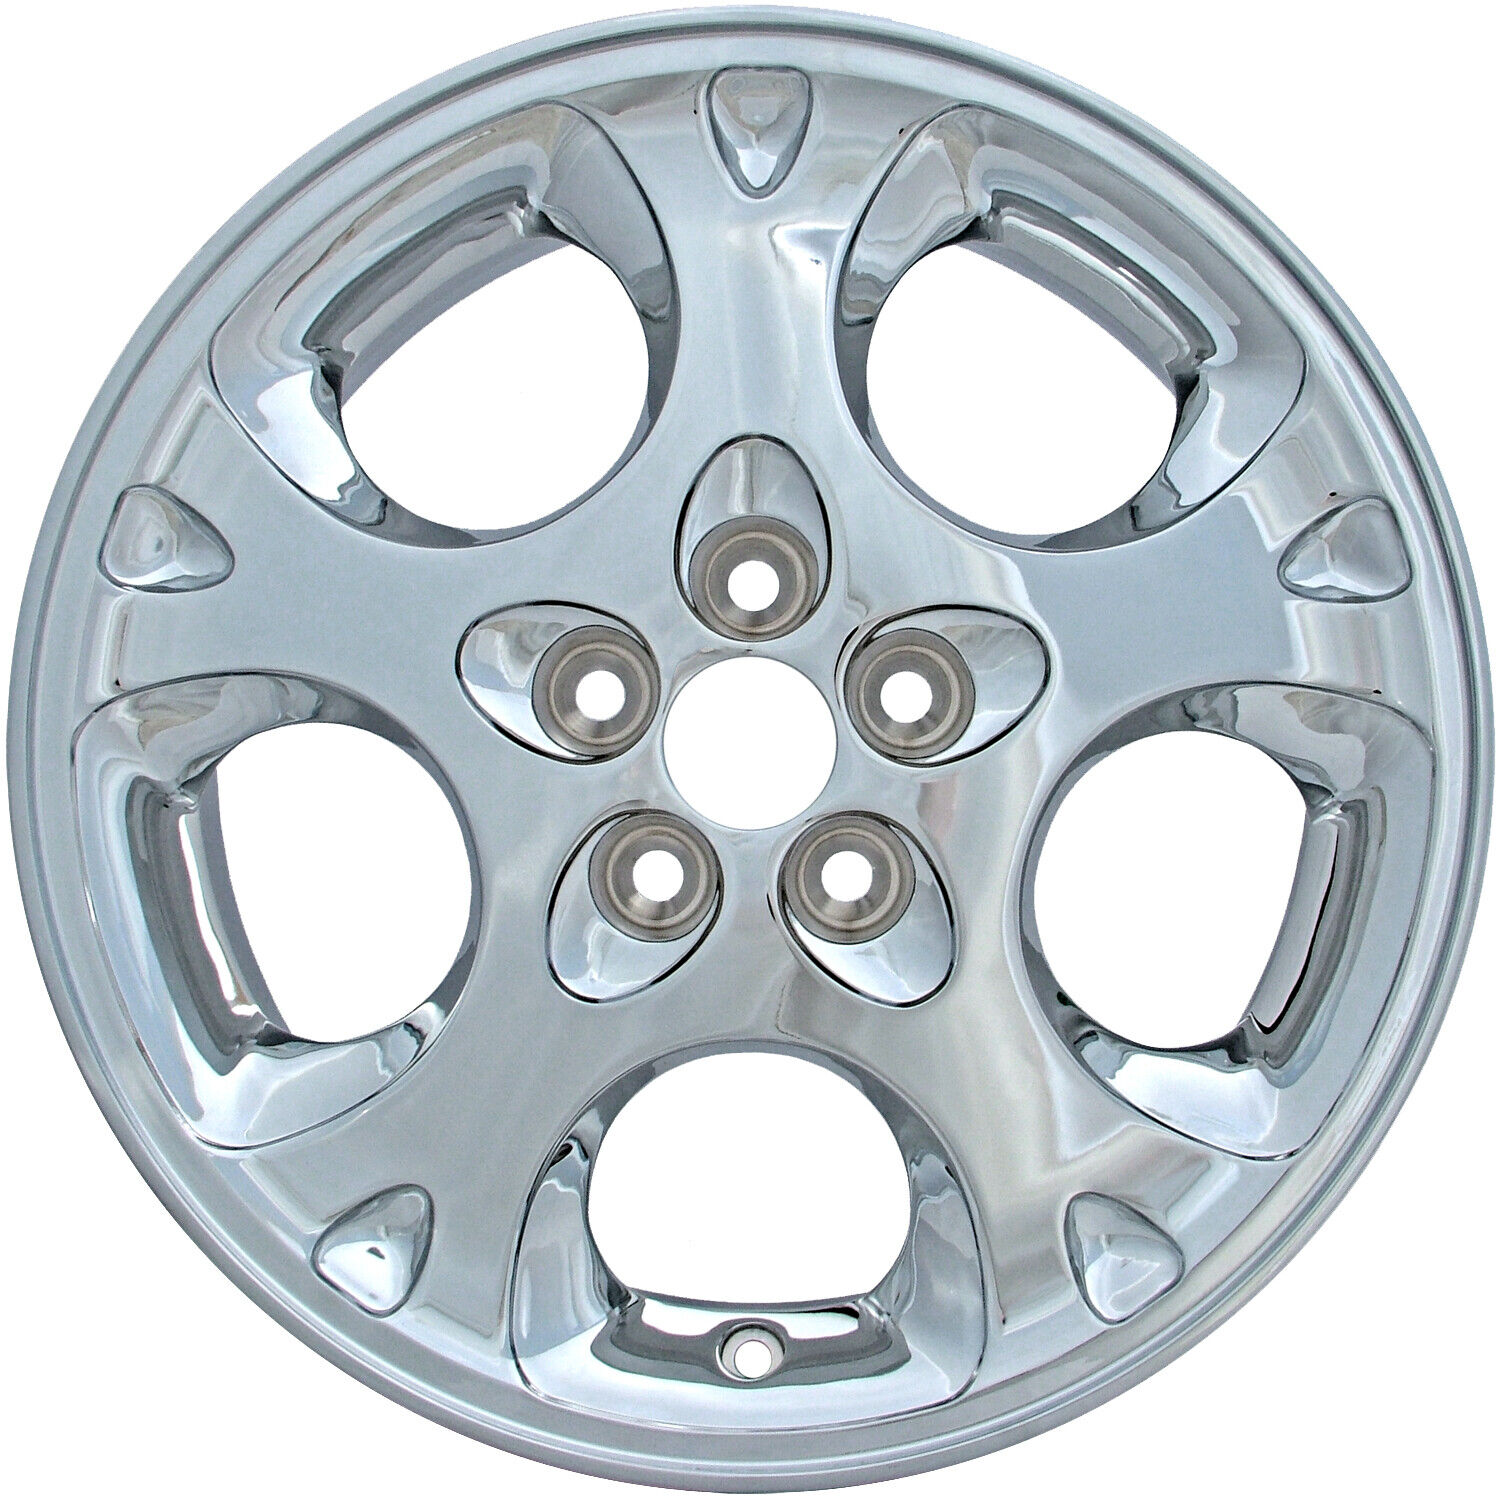 02099 Reconditioned OEM Aluminum Wheel 16x6.5 fits 1997-2000 Sebring Convertible